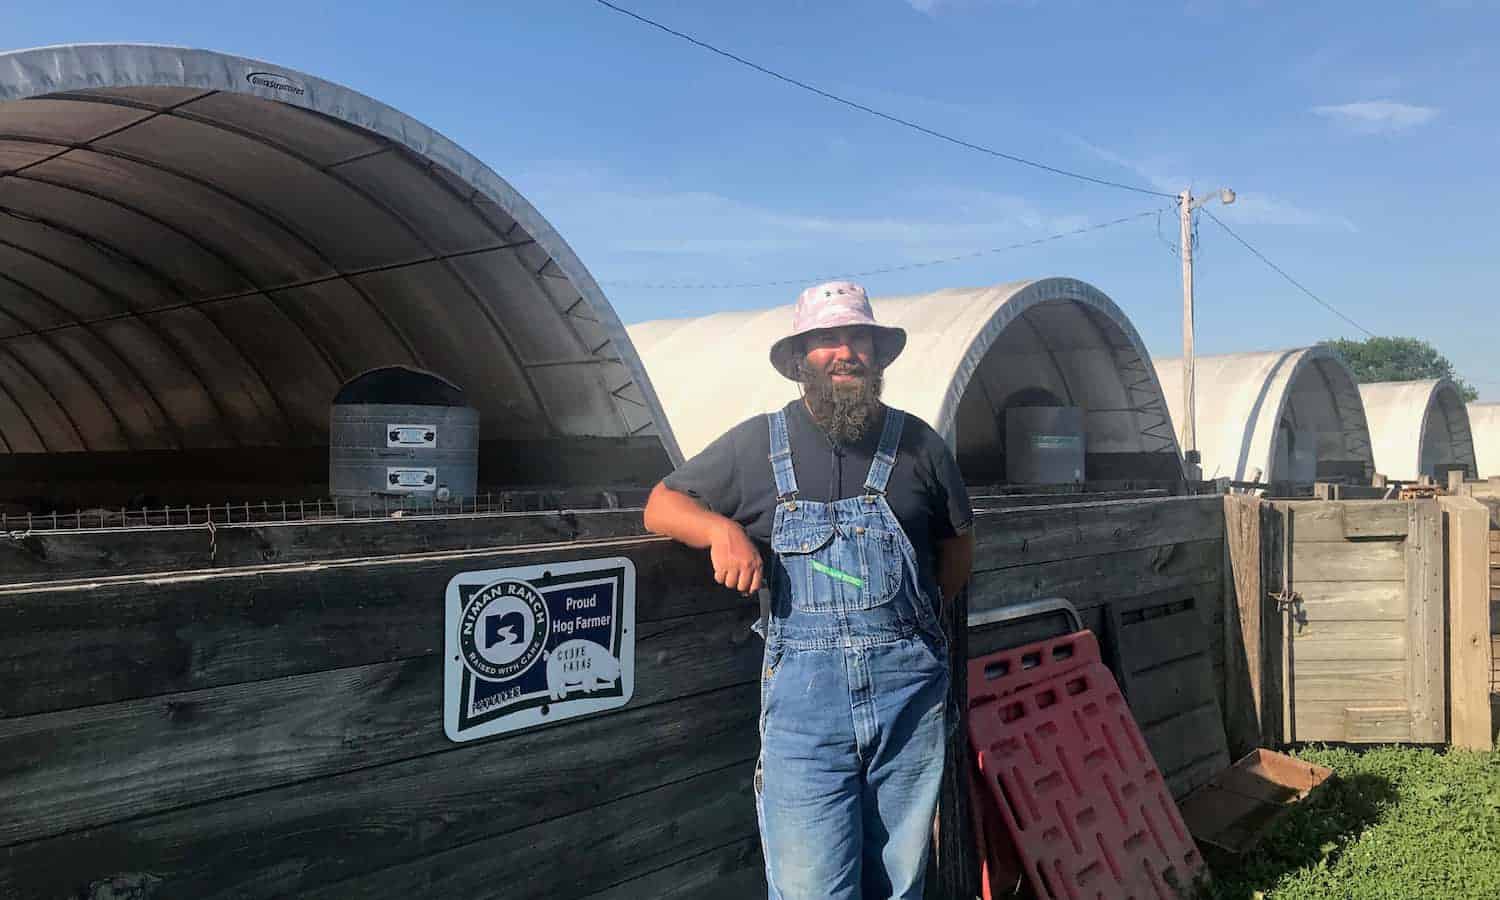 Niman农场农民Adair Crowe拥抱“旧”和新:新技术帮助“旧”成形有效和可持续的耕作方法。